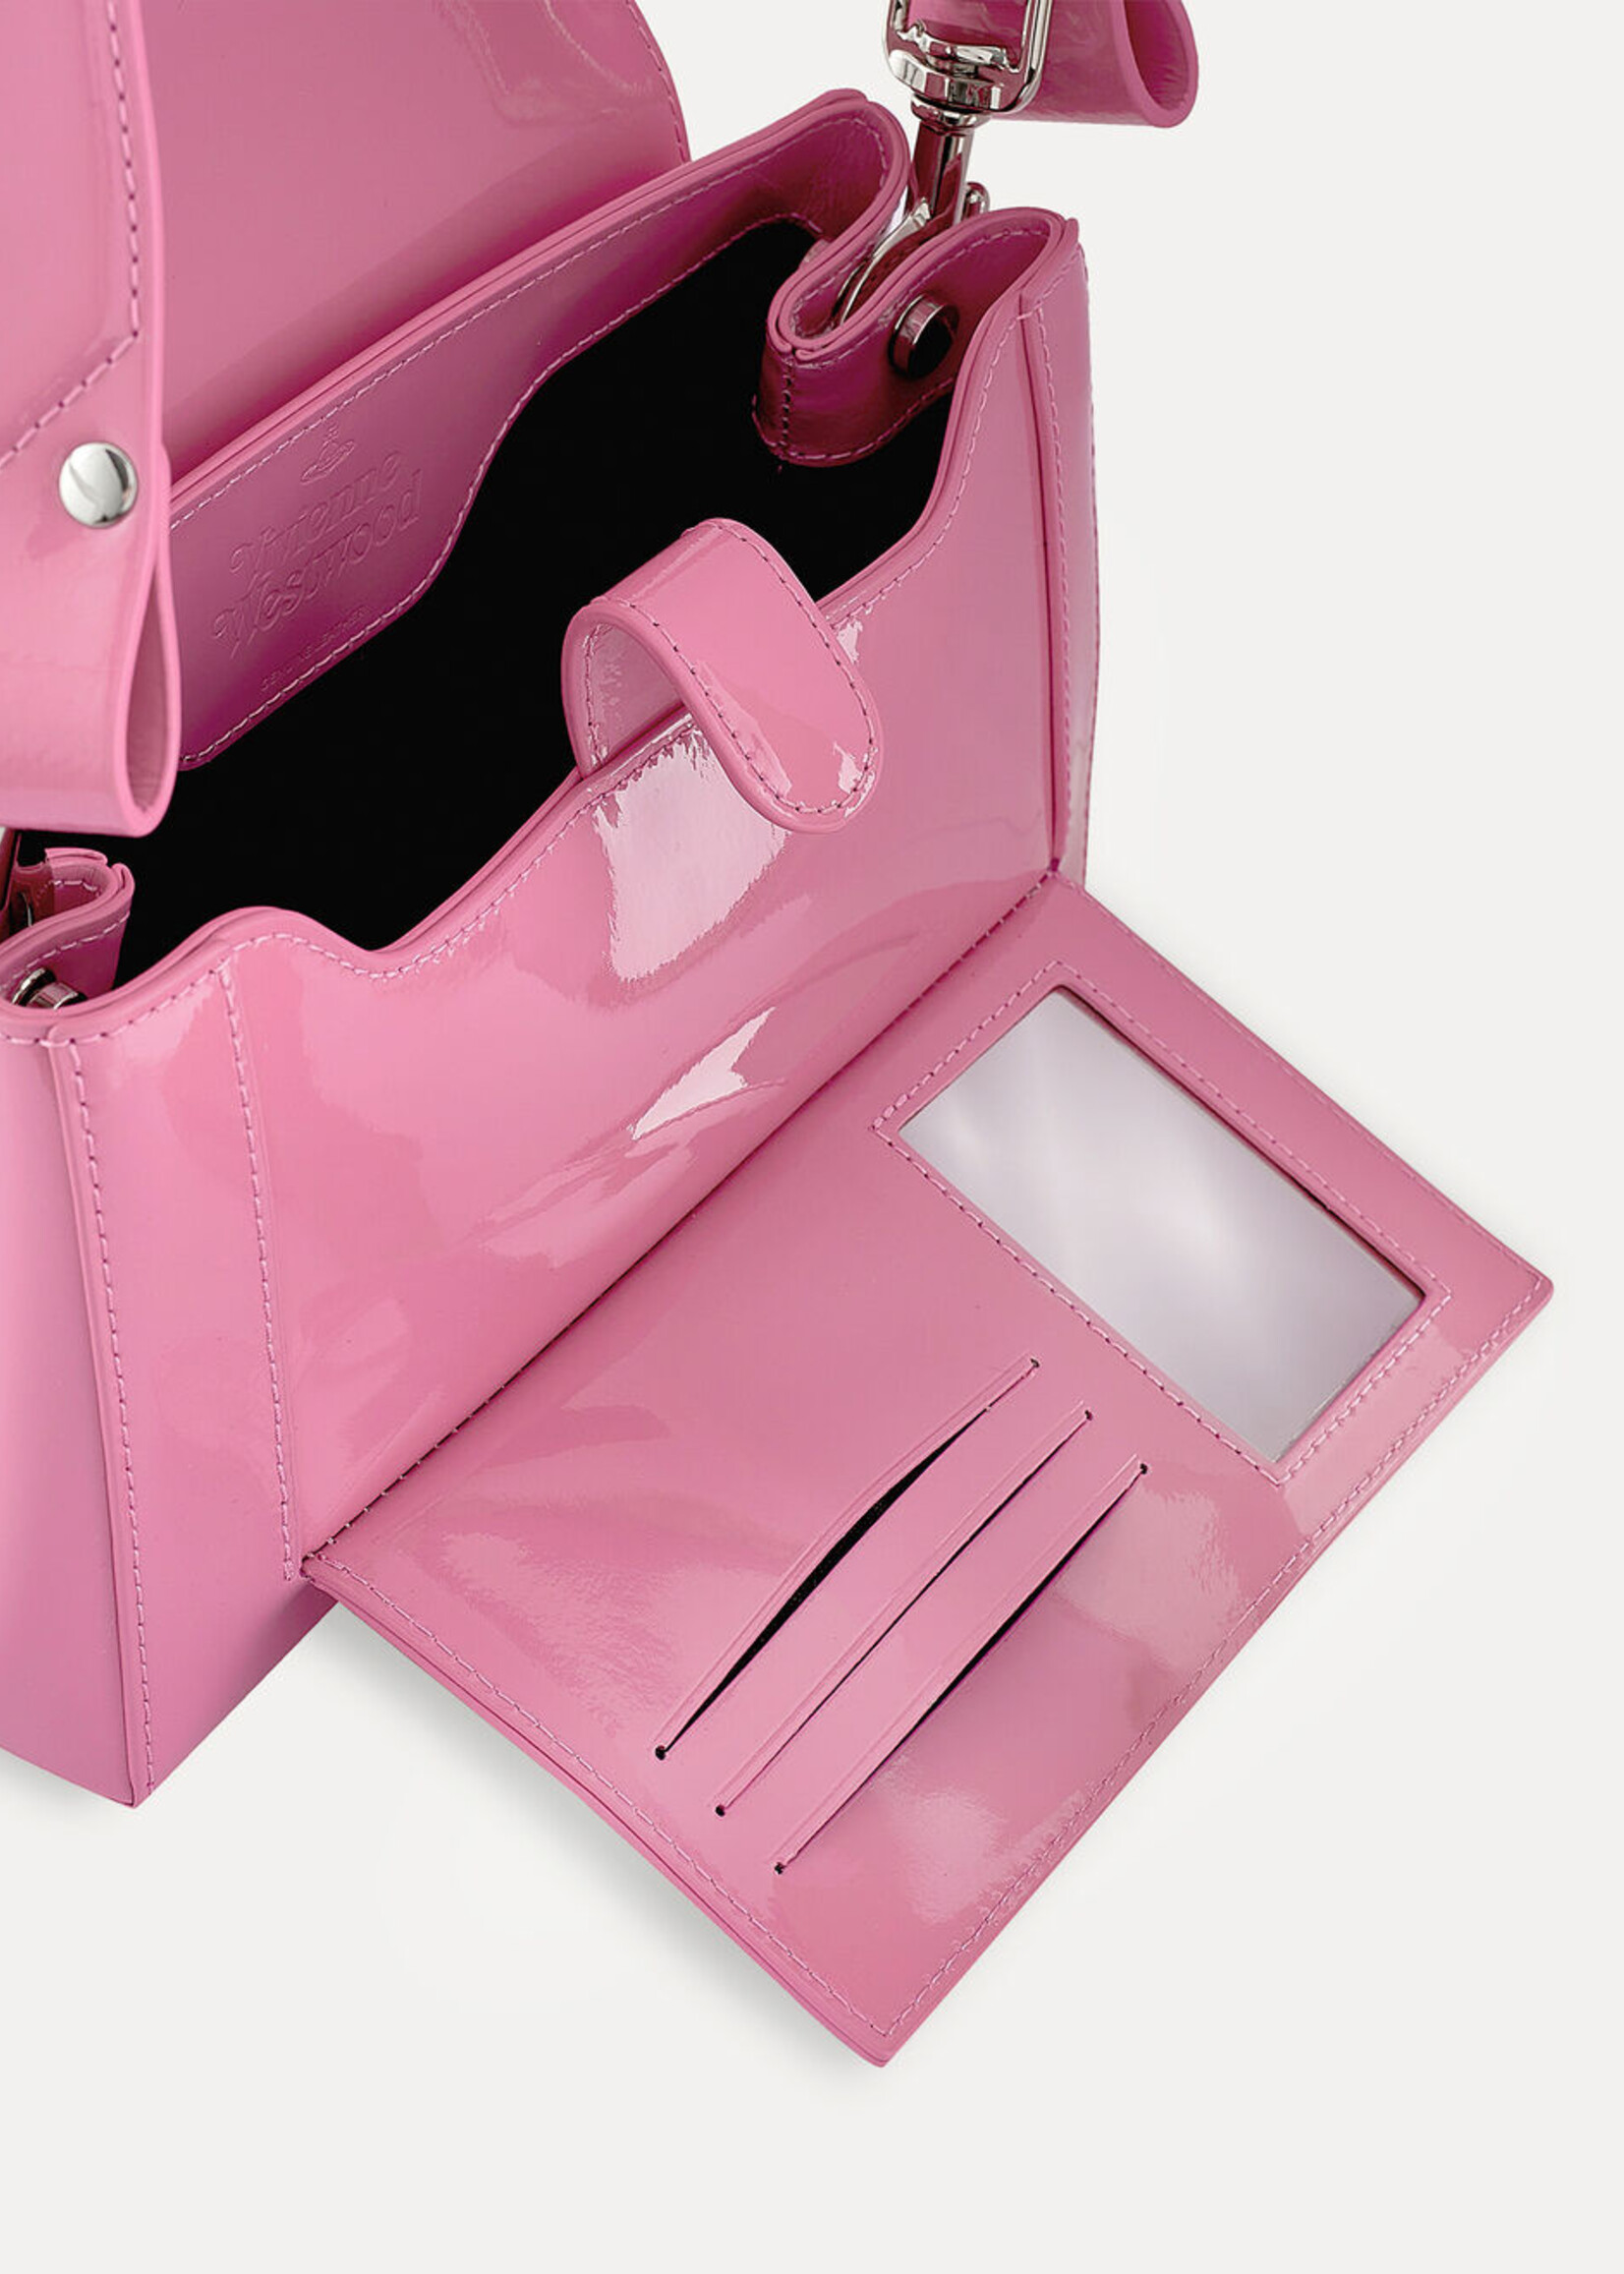 VIVIENNE WESTWOOD Hazel Medium Handbag in Pink Patent Leather